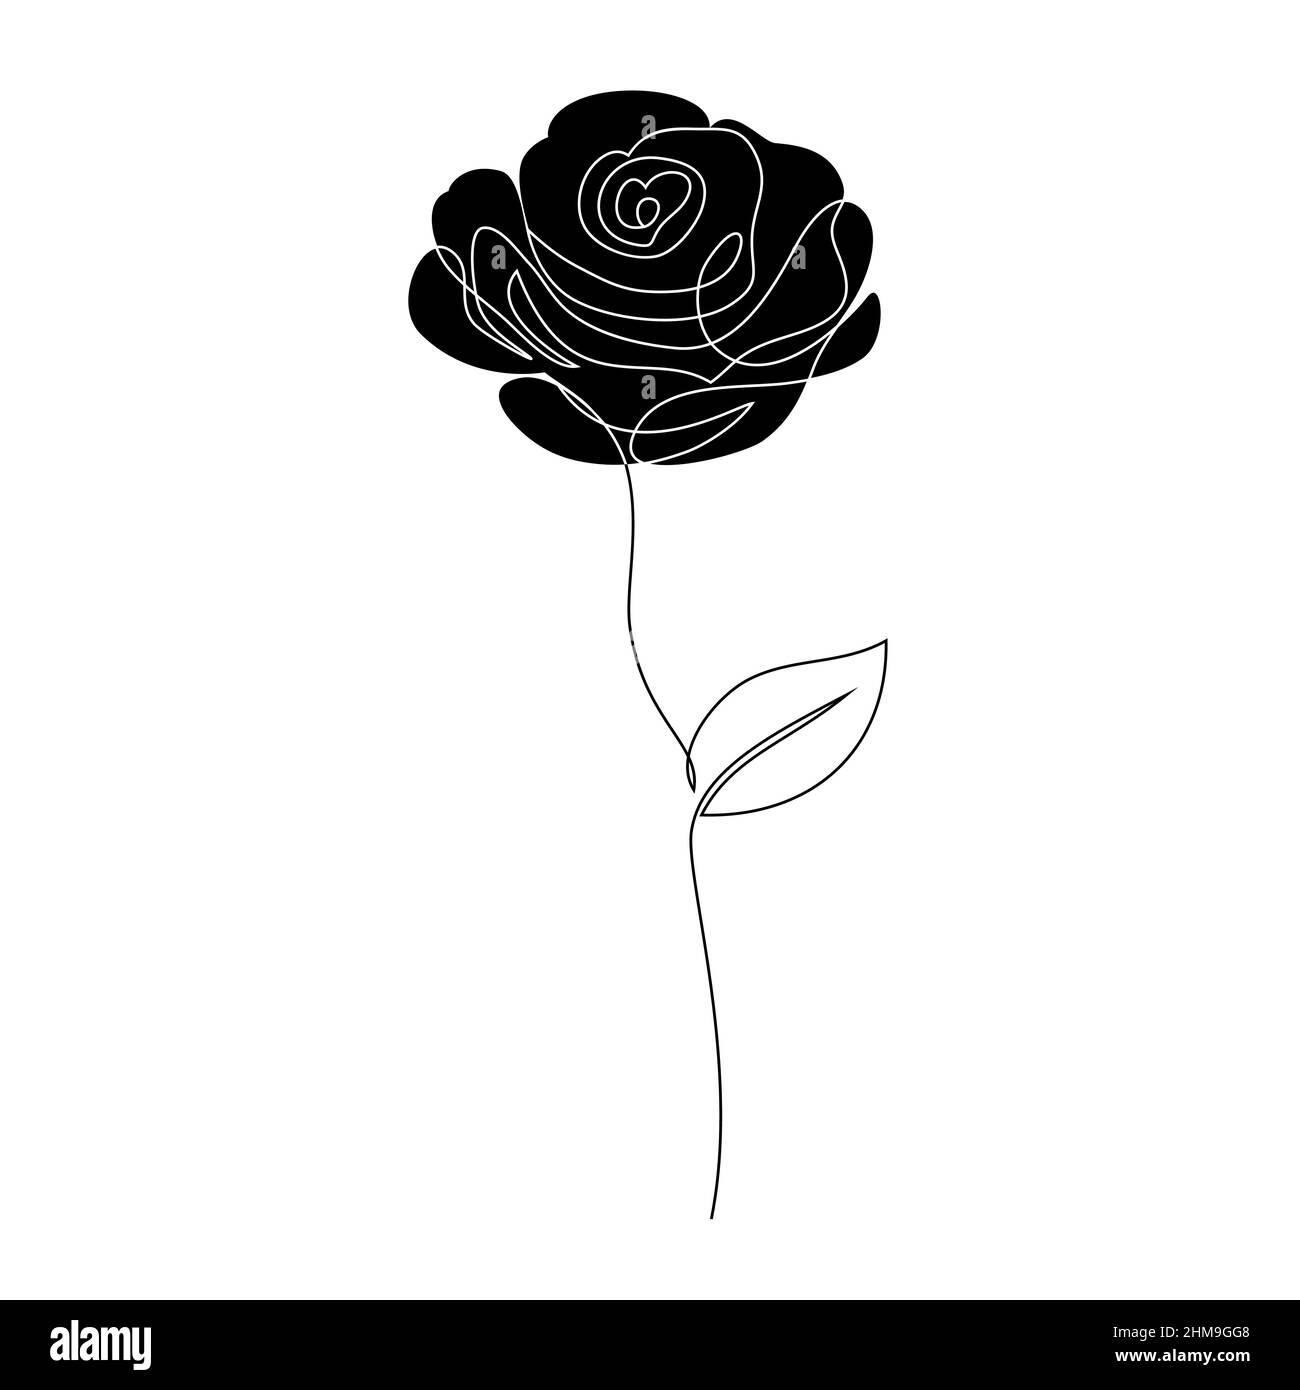 Rosenblüte im Linienkunststil Stock Vektor